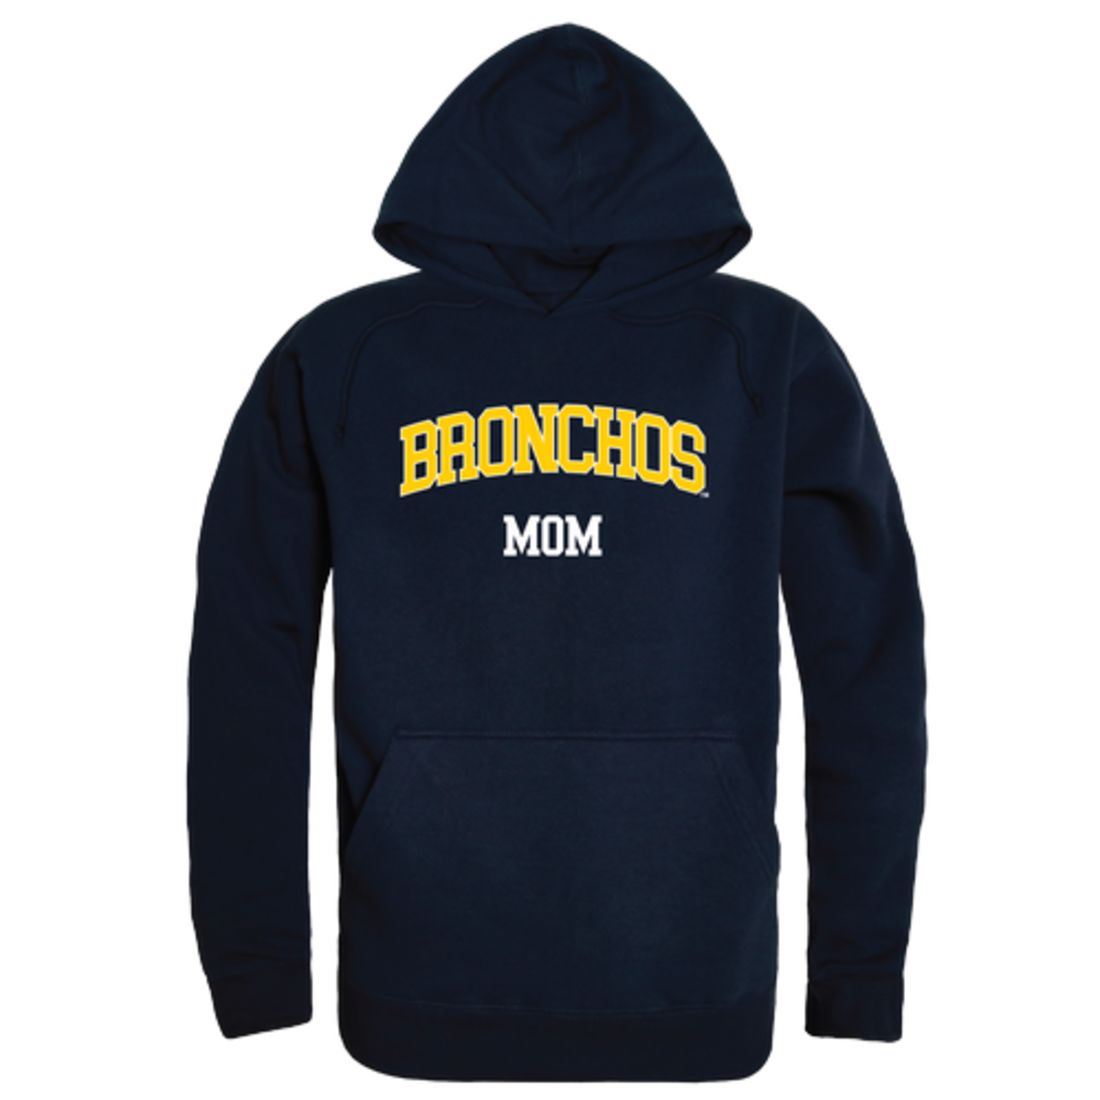 University of Central Oklahoma Bronchos Mom Fleece Hoodie Sweatshirts